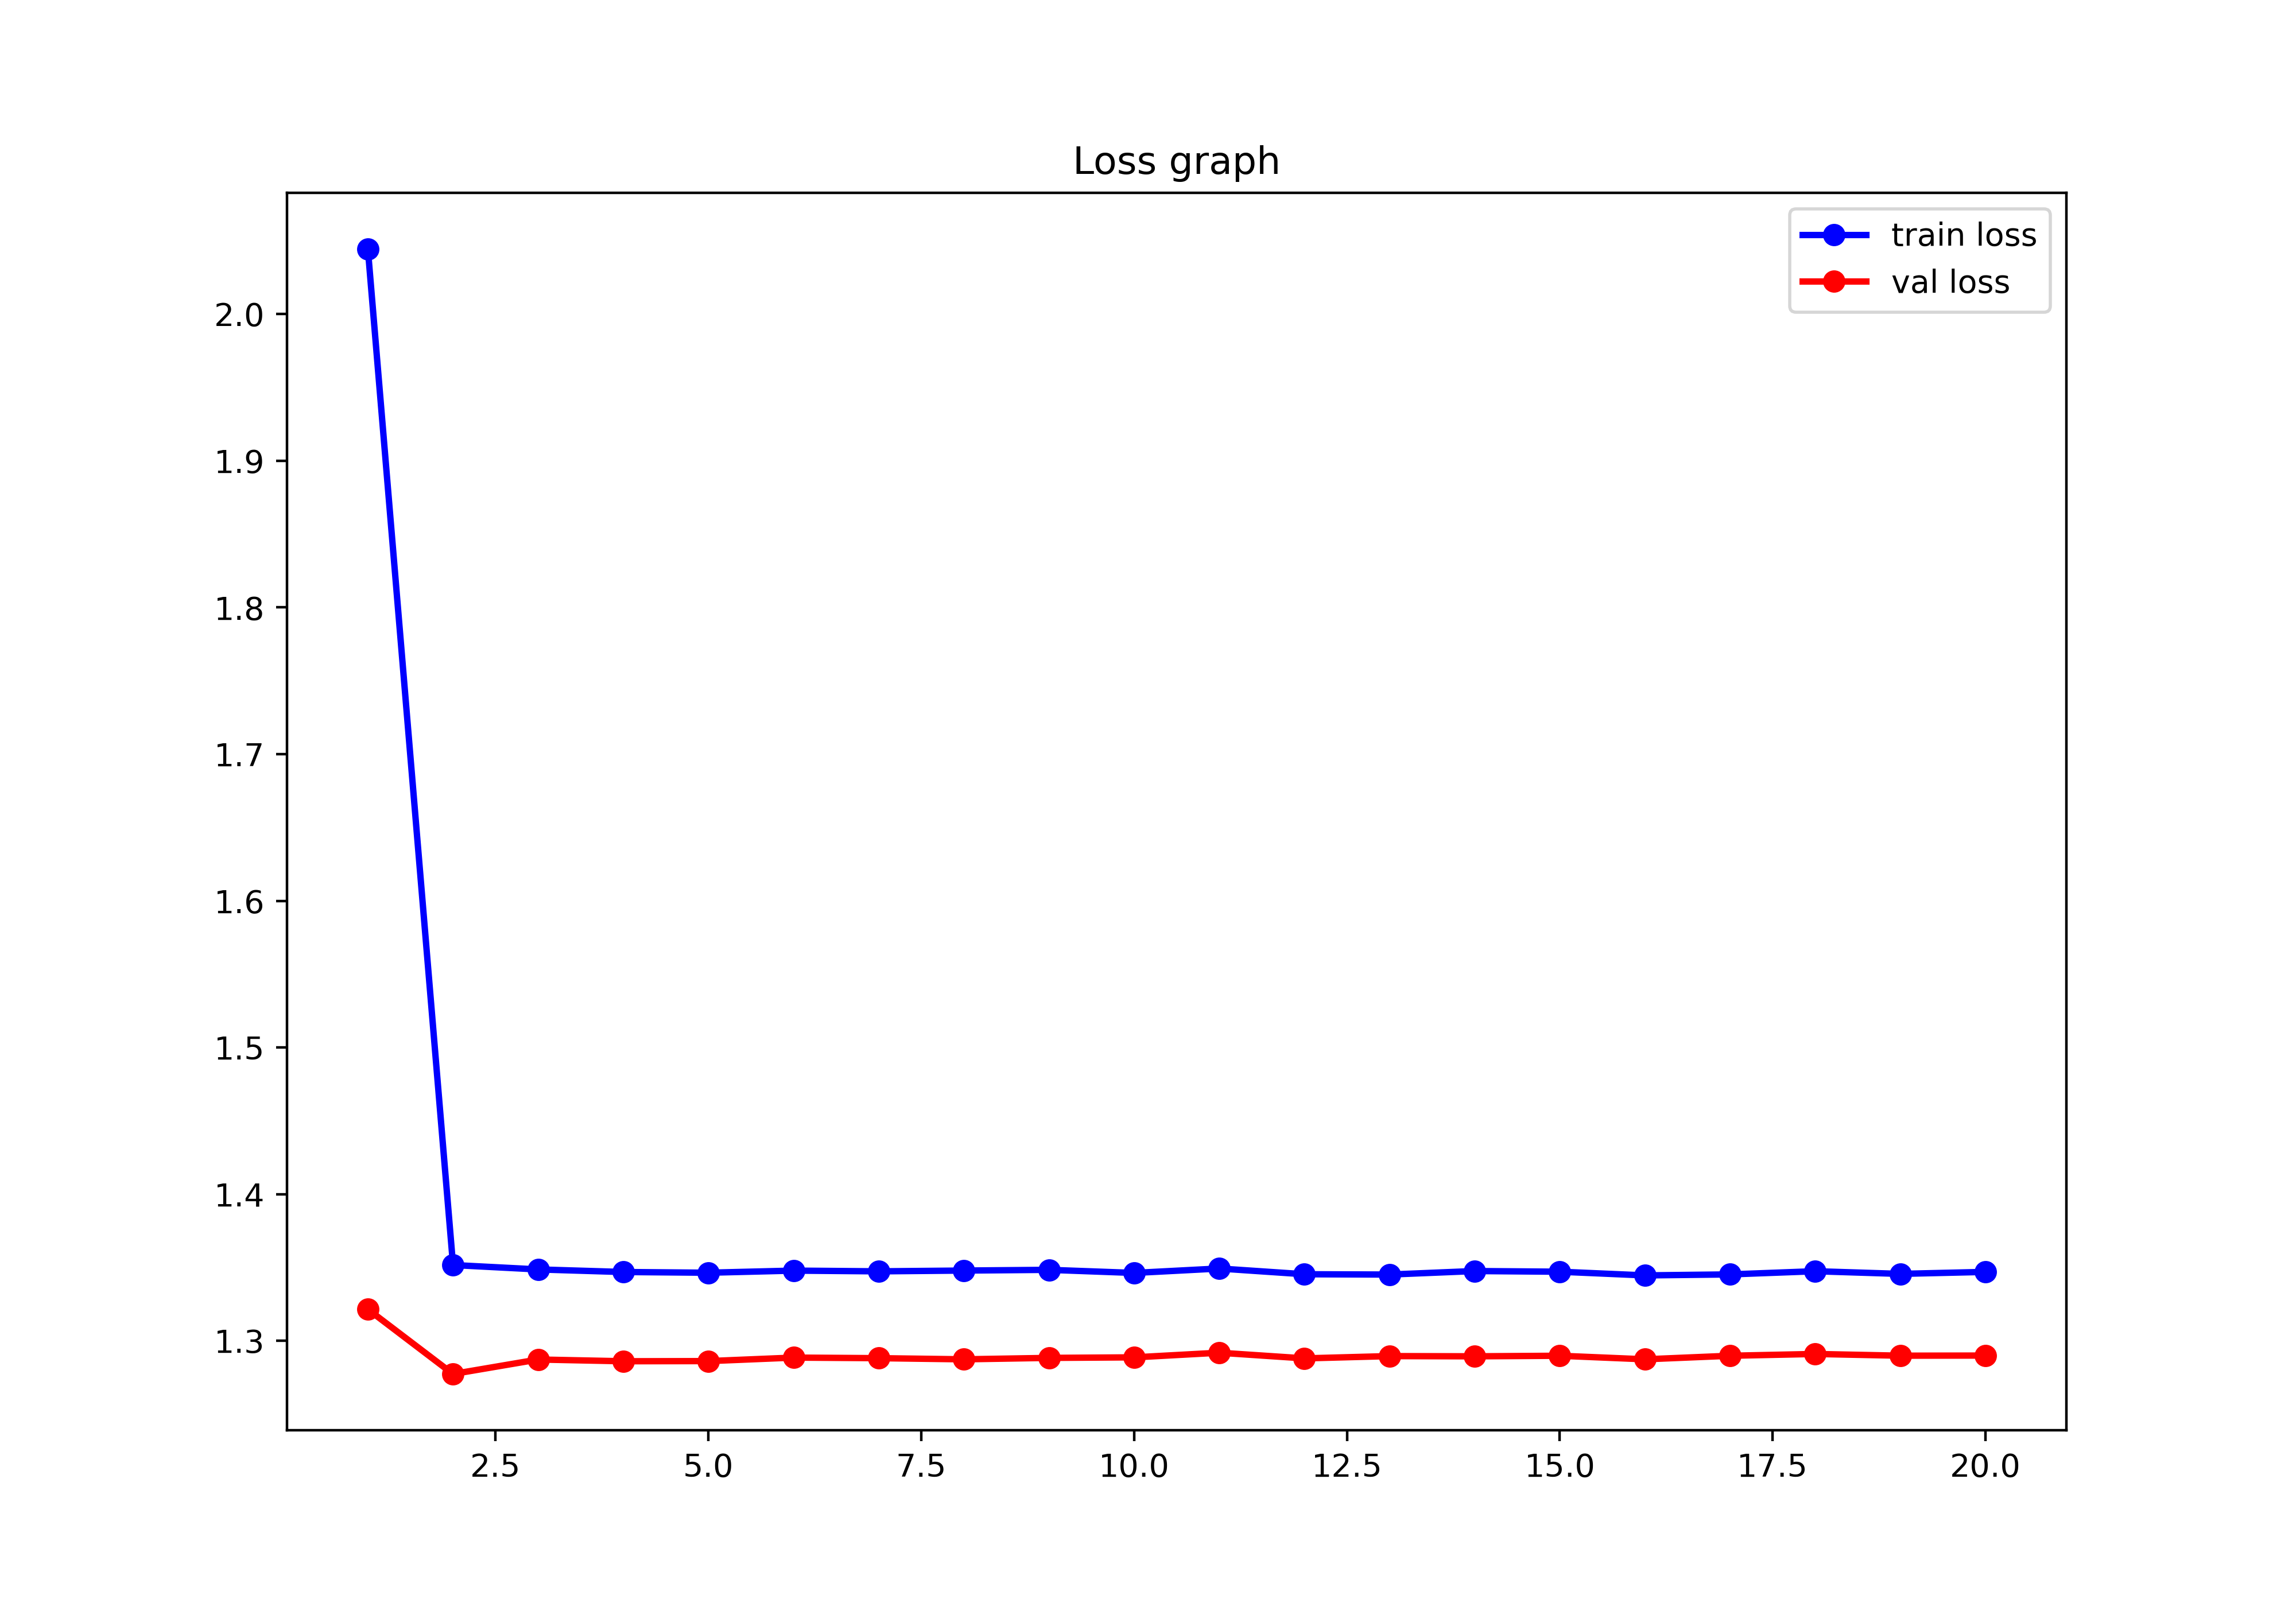 AlexNet loss graph